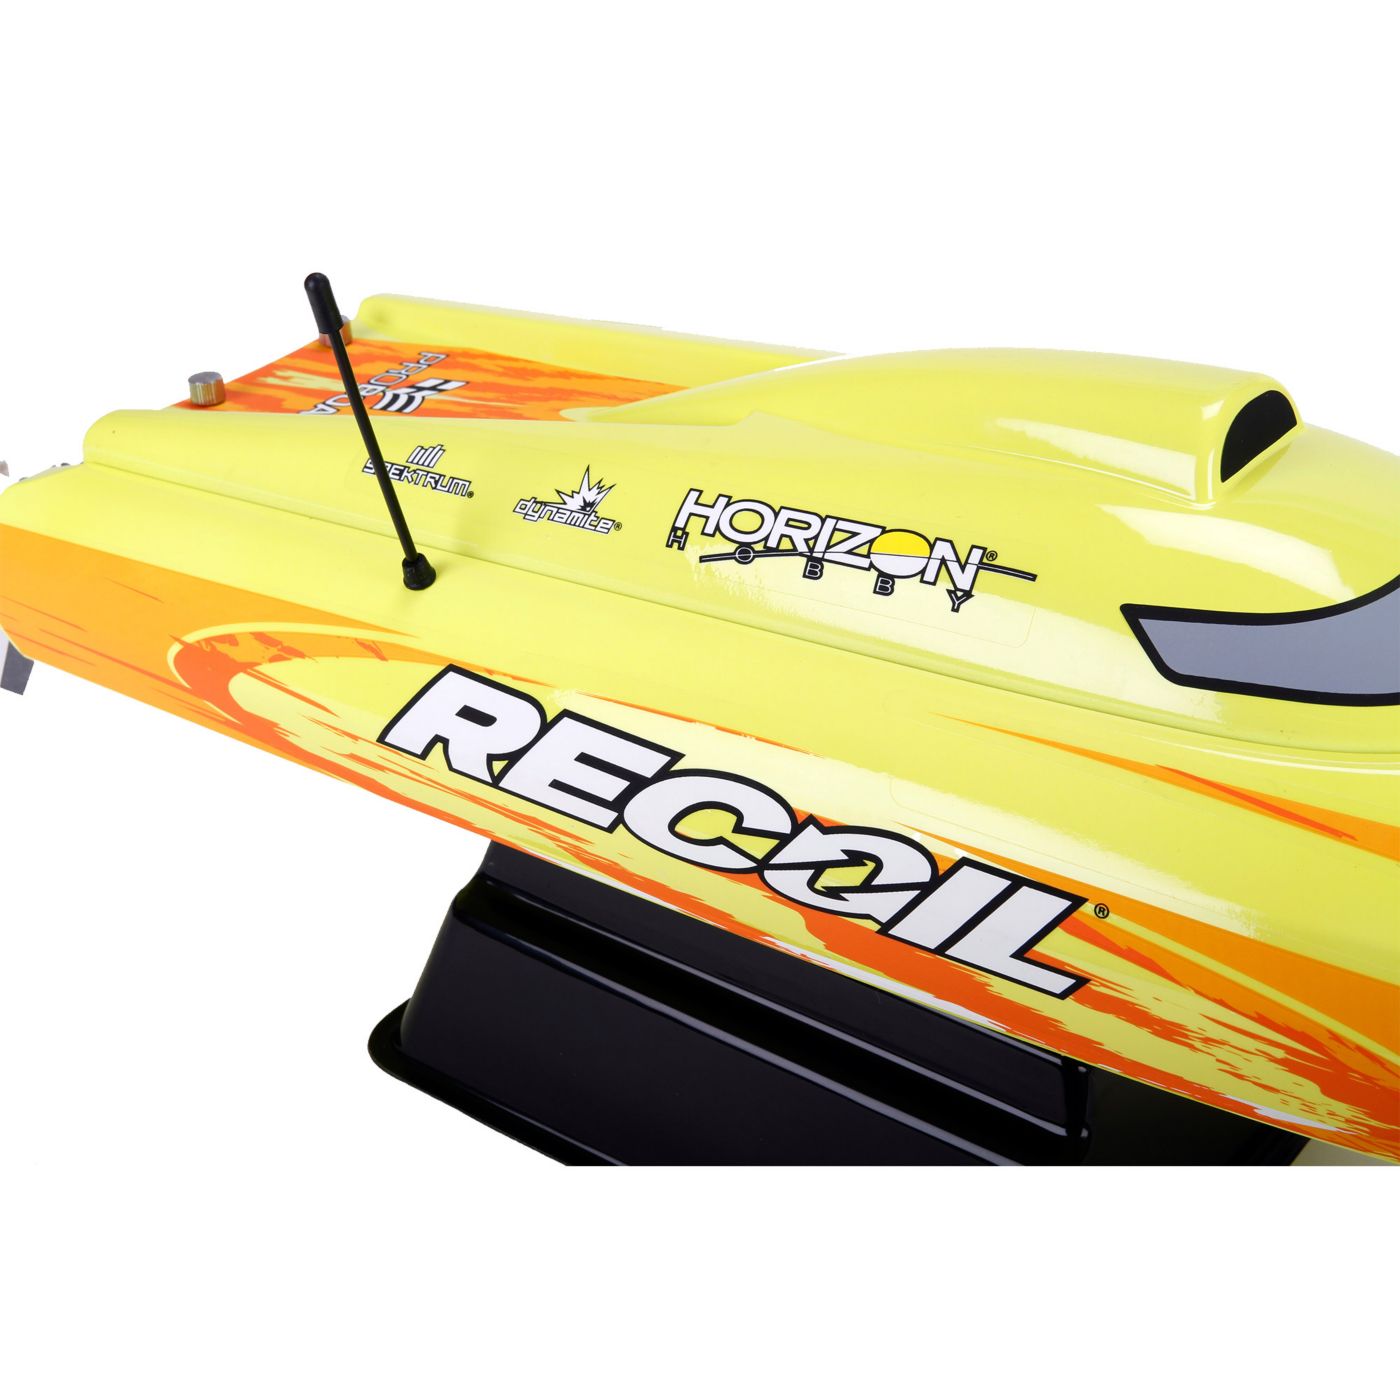 ProBoat Recoil 26 Deep-V brushless rc boat rtr 6